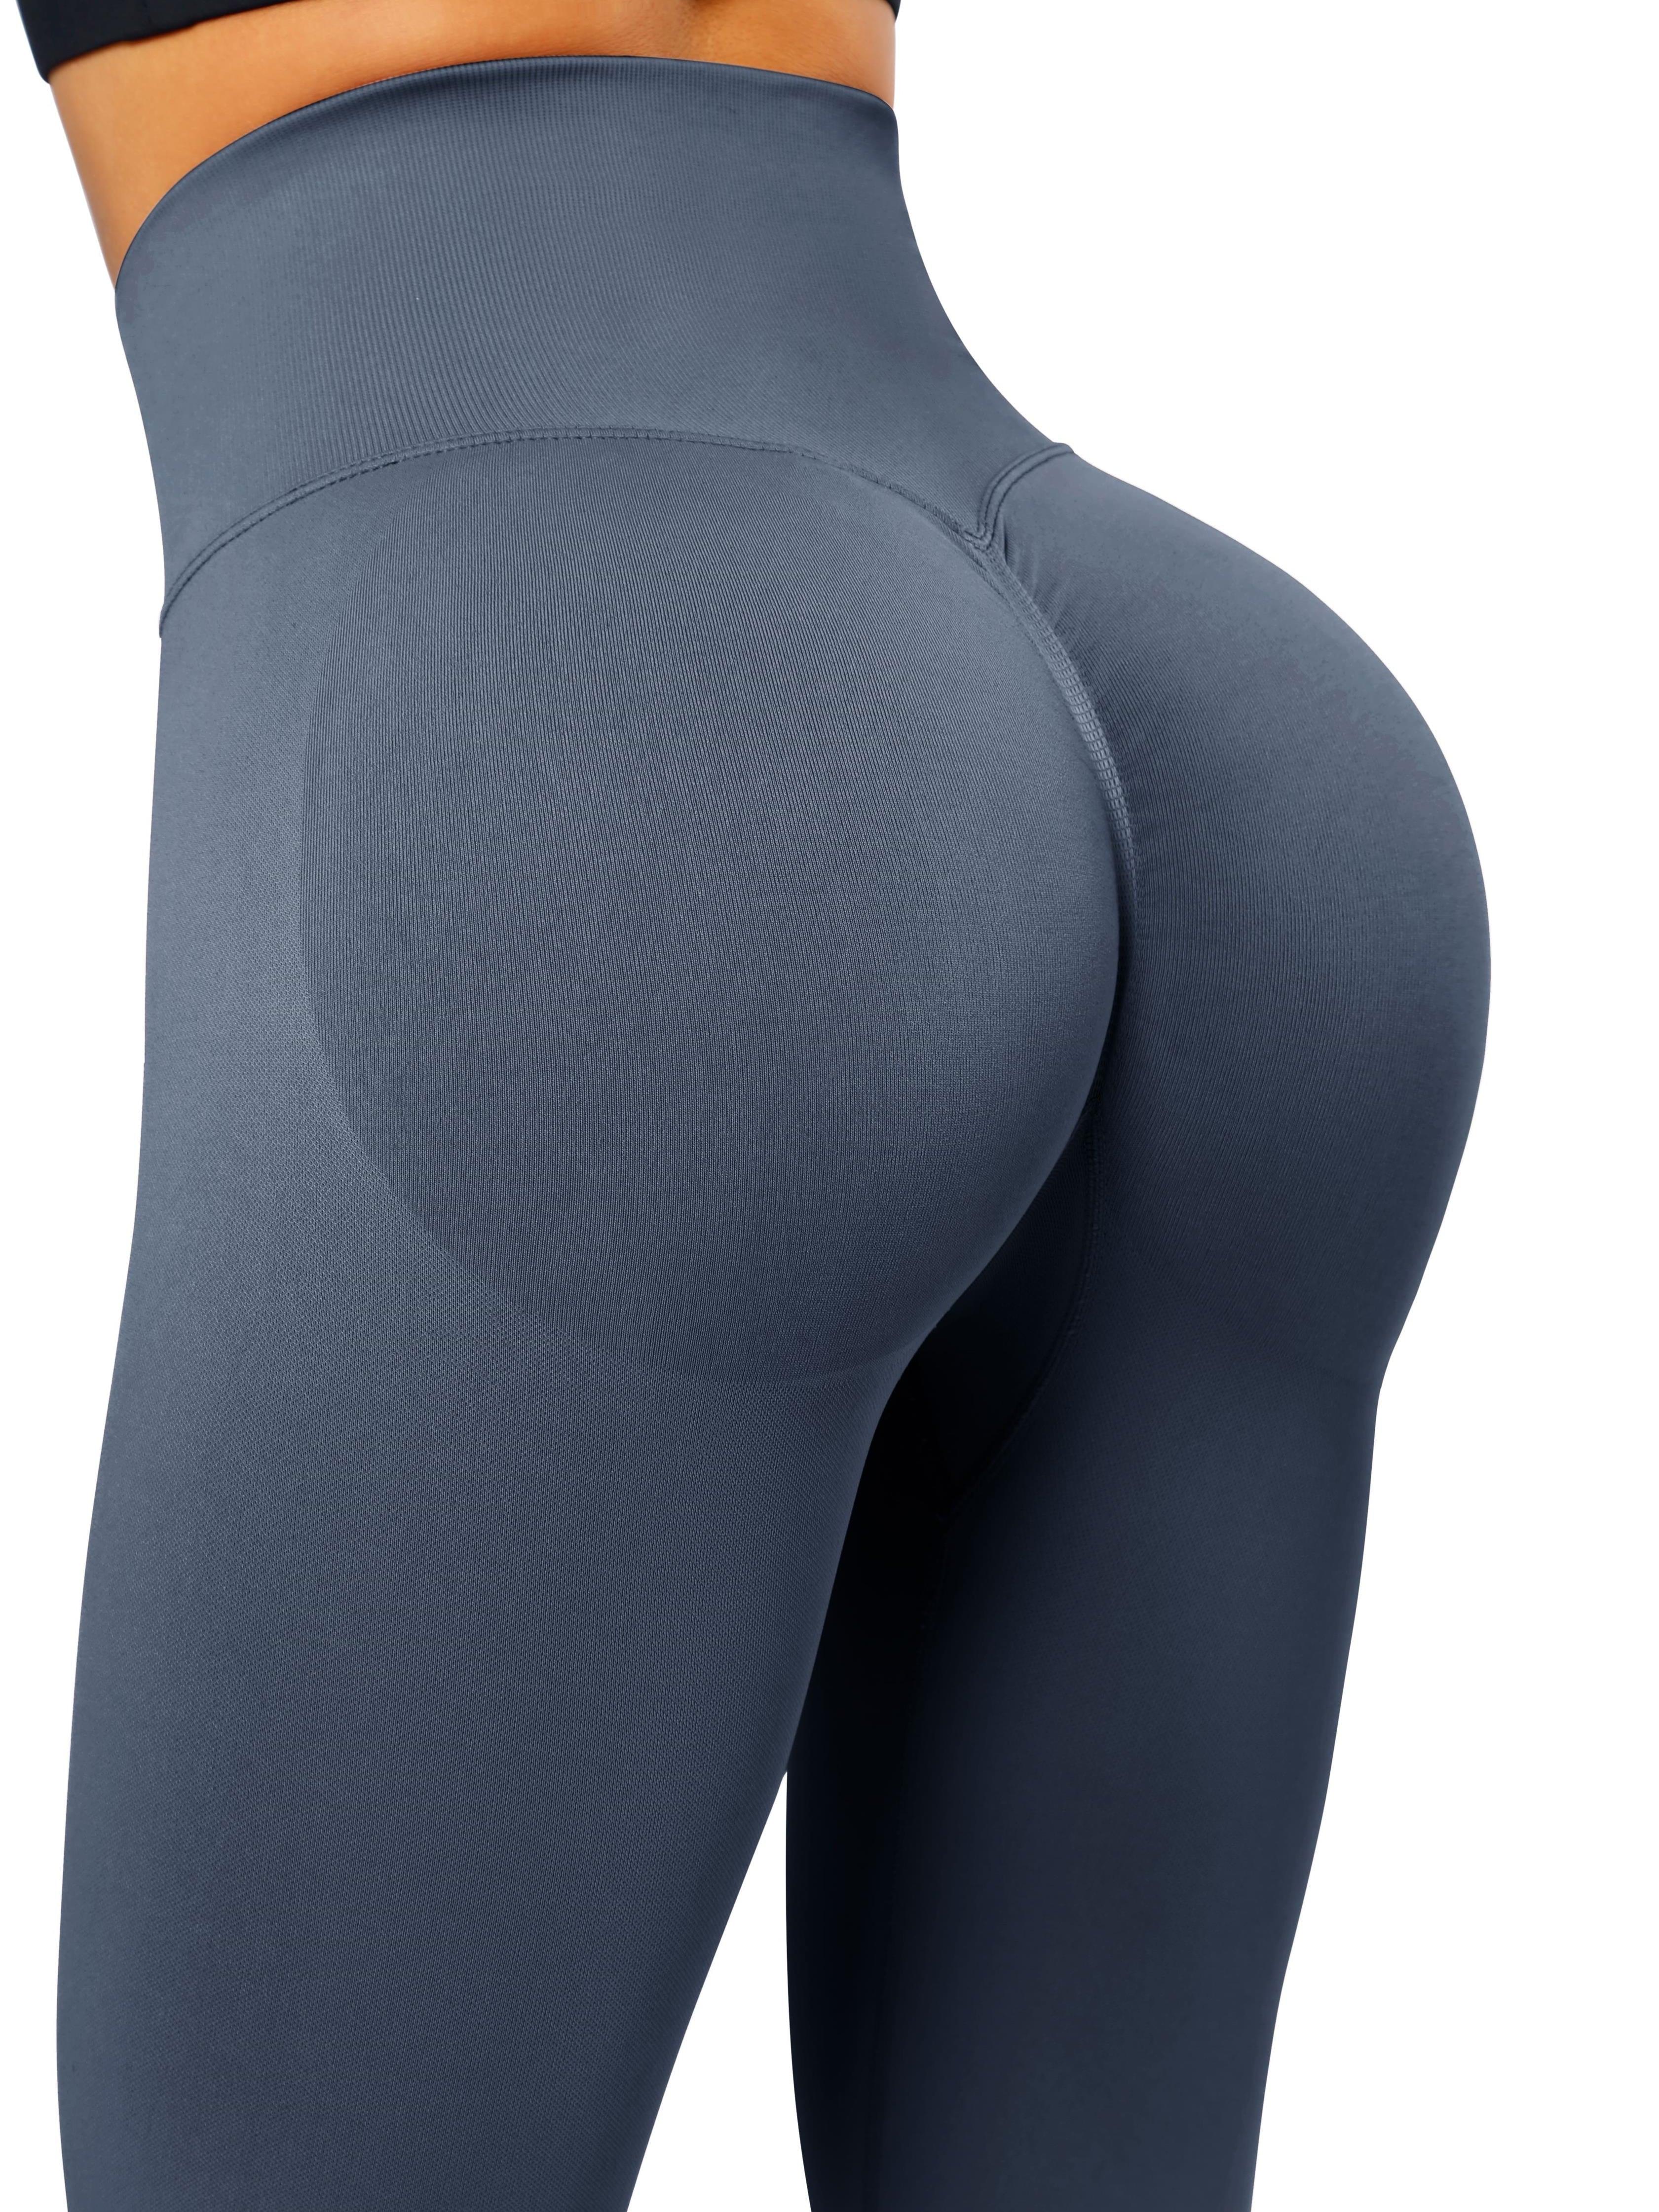  SUUKSESS Women Flare Leggings Scrunch Butt Lifting Bootcut  High Waisted Tummy Control Bell Bottom Yoga Pants